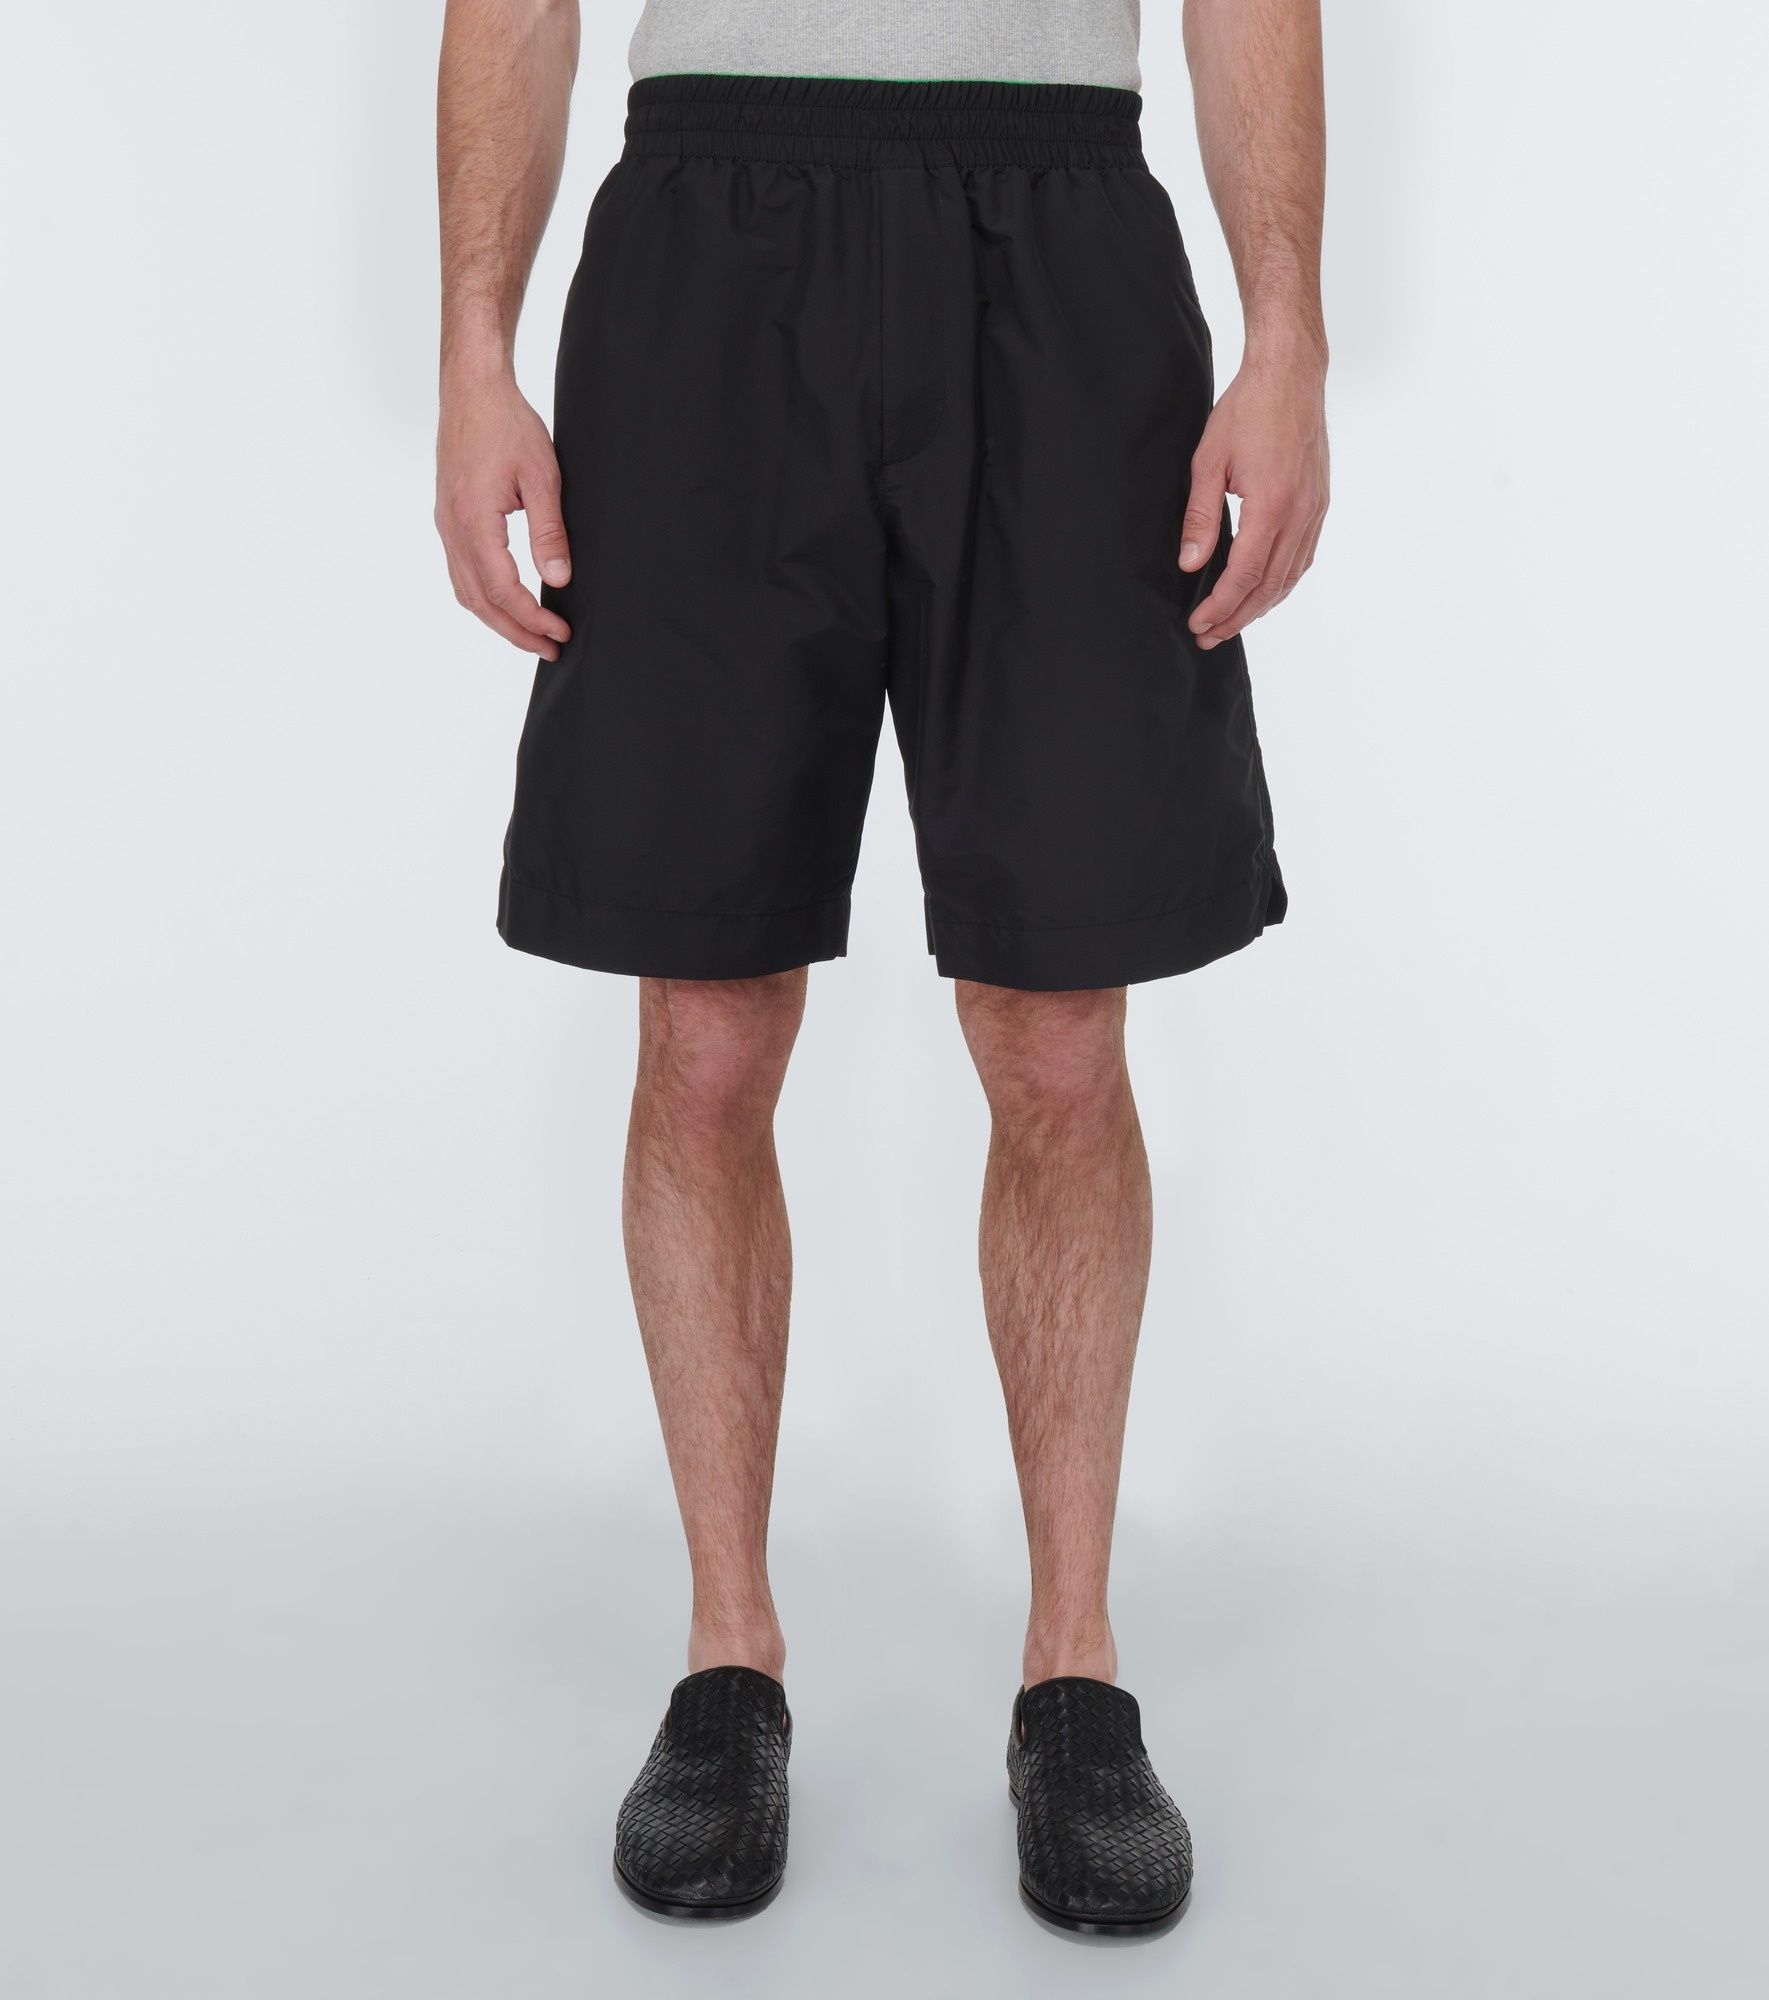 Technical shorts - 3